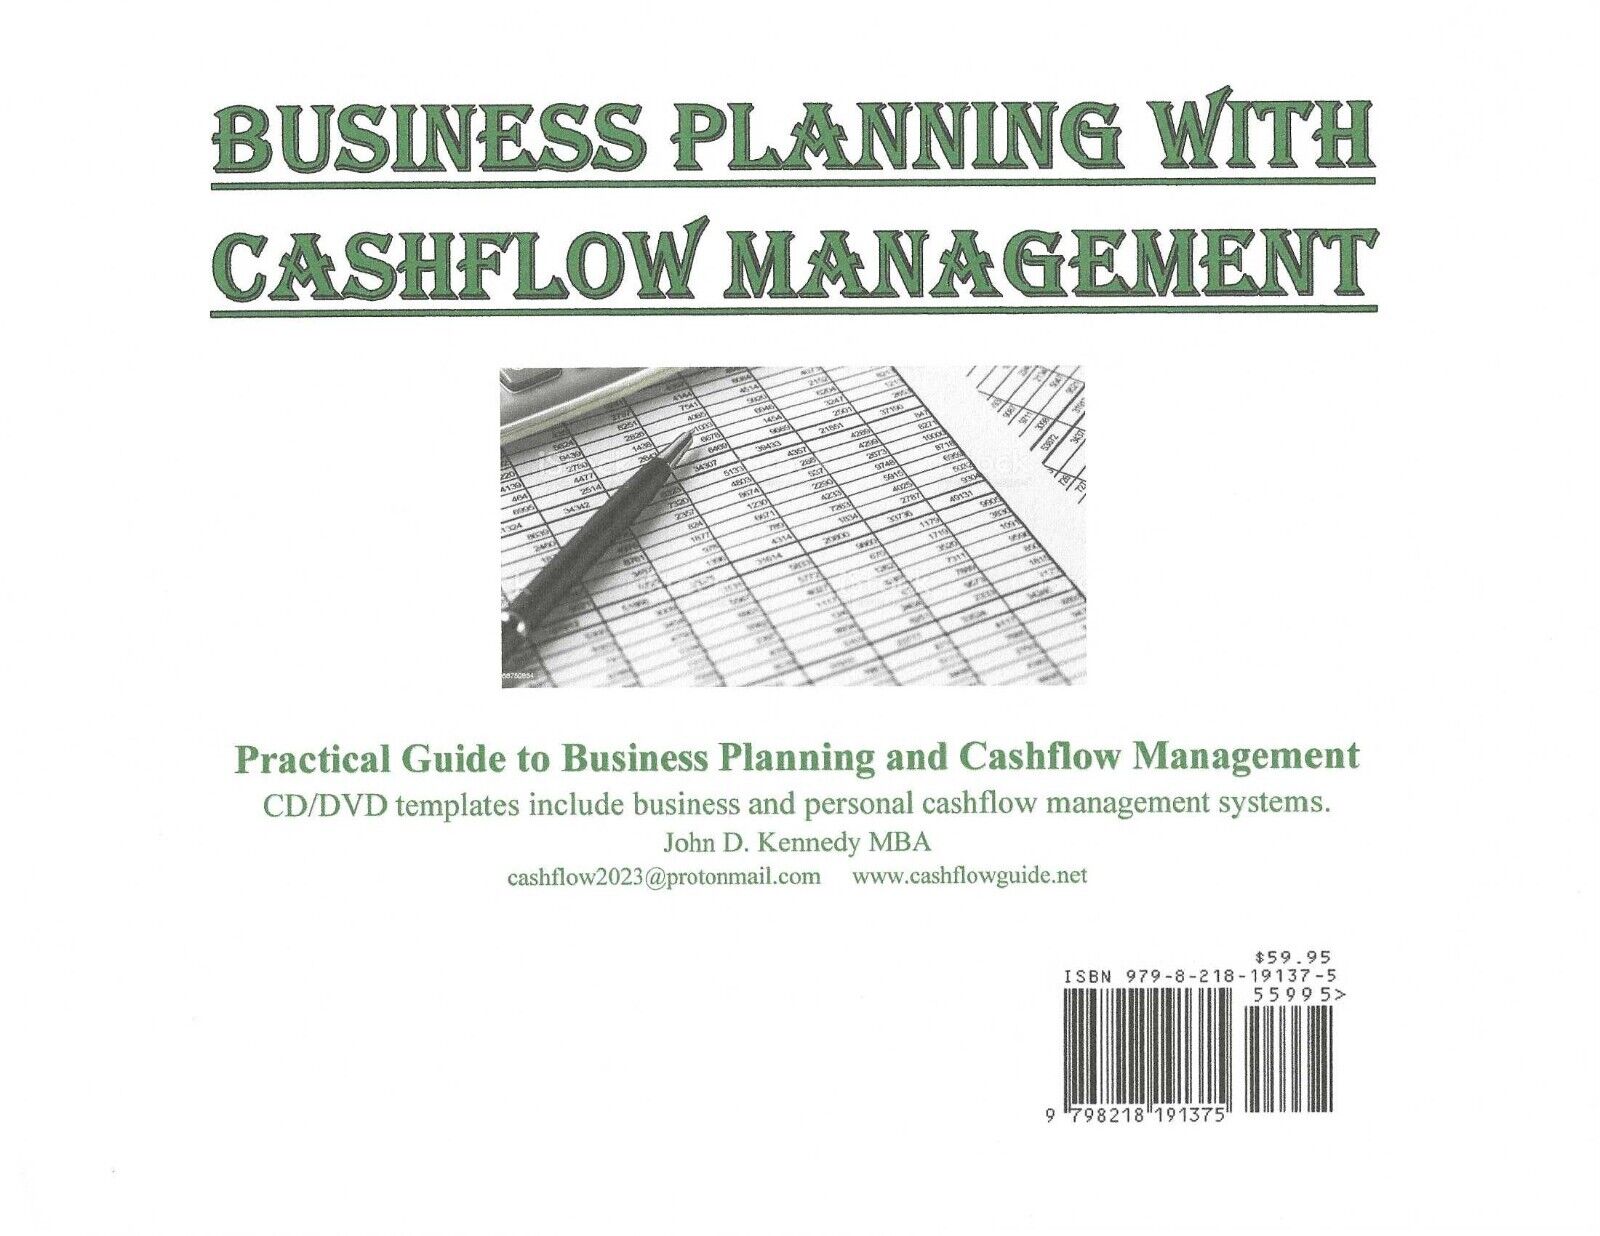 Business Planning with Cashflow Management